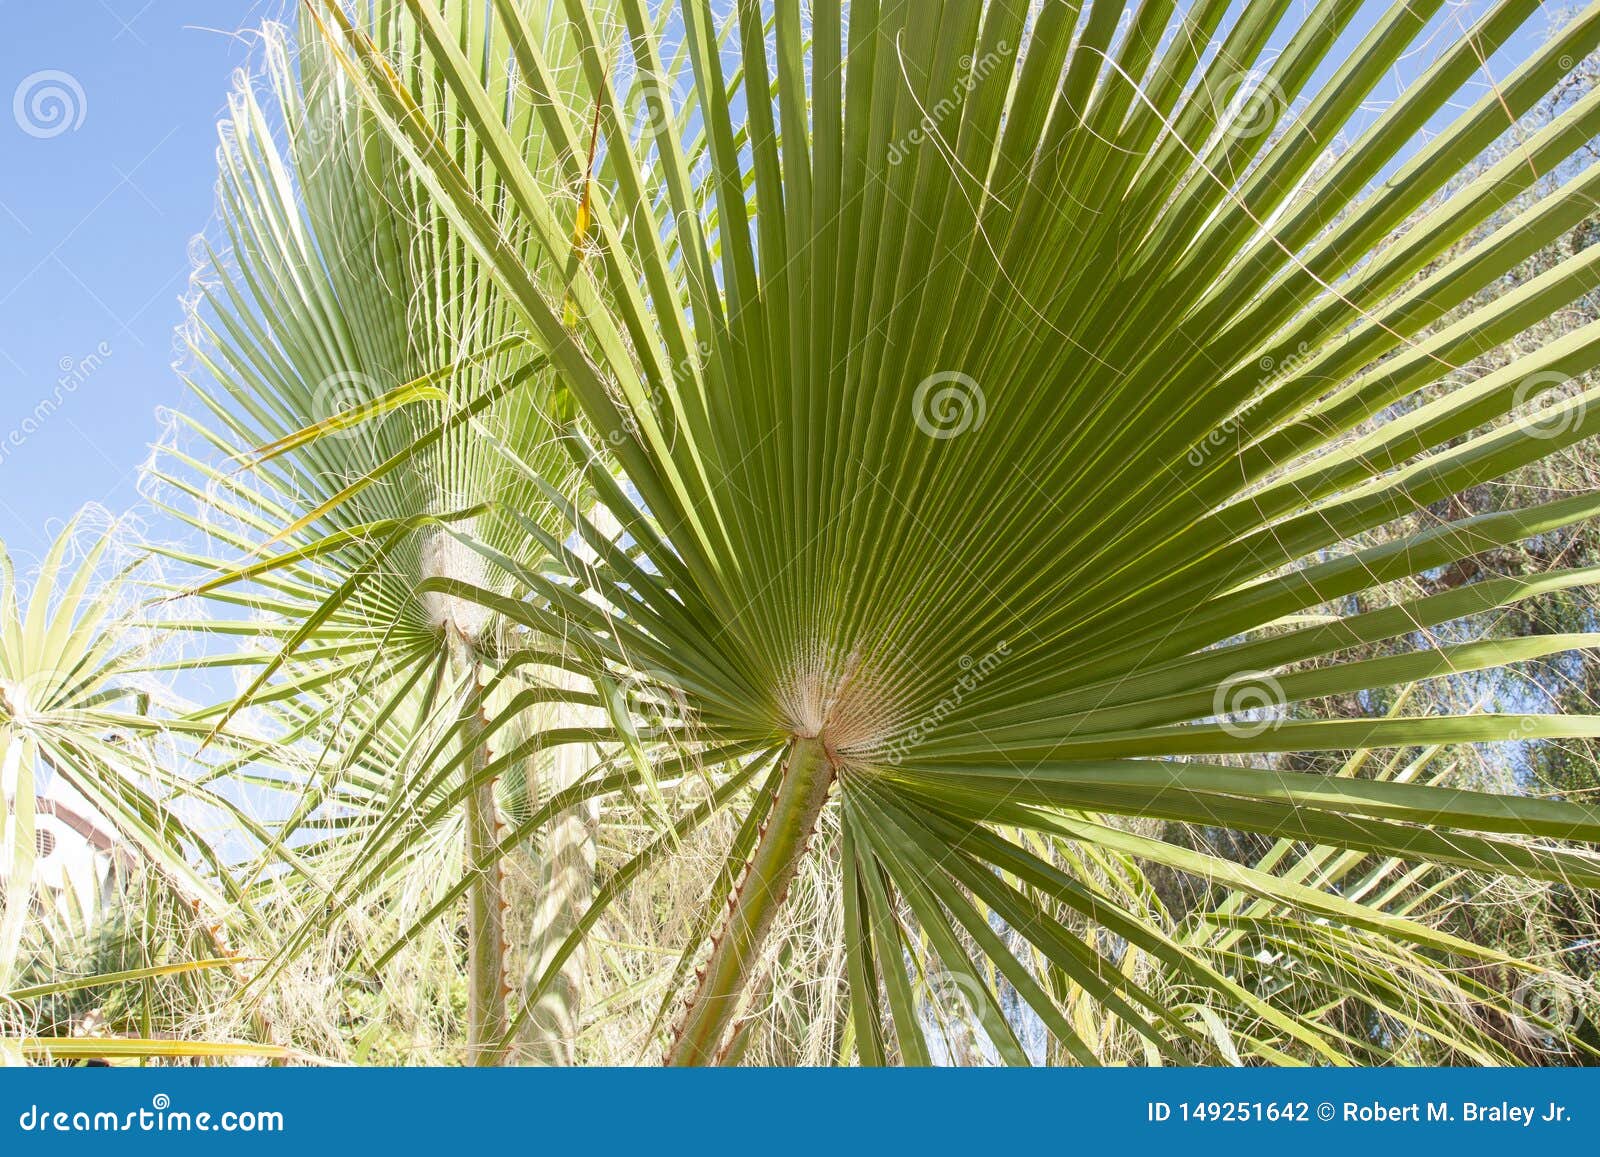 palm trees botanical perennial lianas shrubs trees